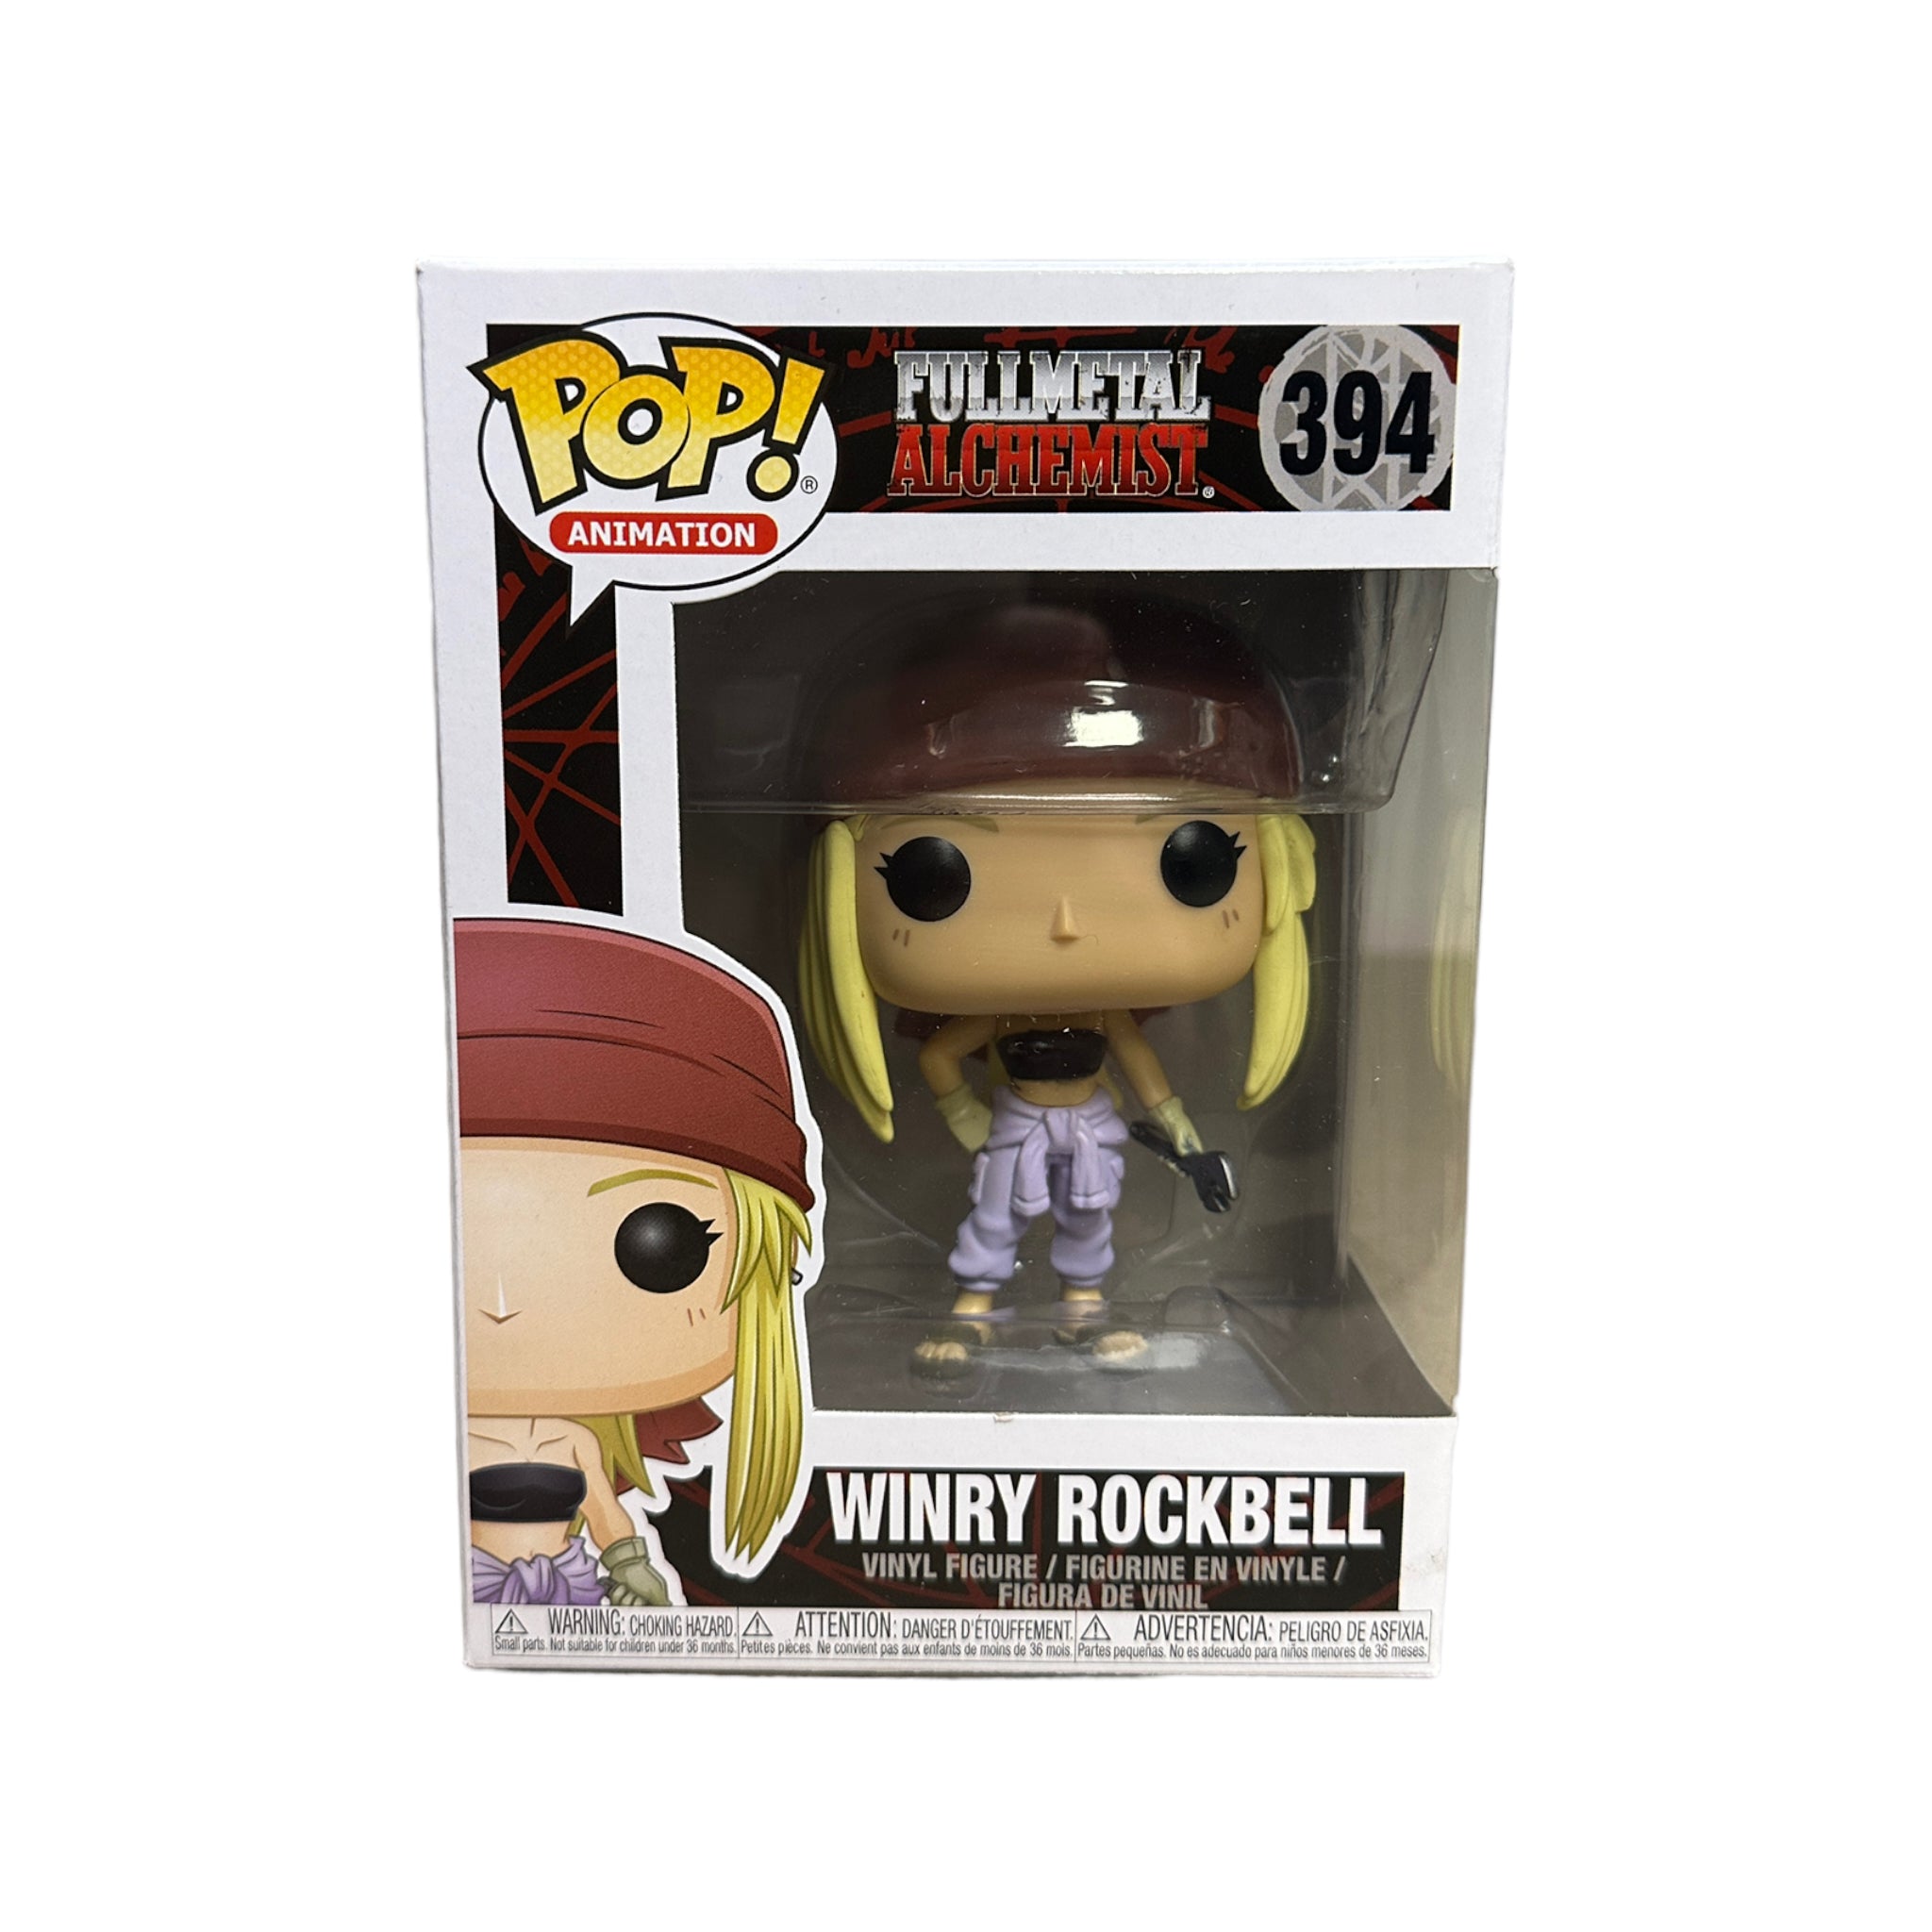 Winry Rockbell #394 Funko Pop! - Fullmetal Alchemist - 2018 Pop! - Condition 8.75/10